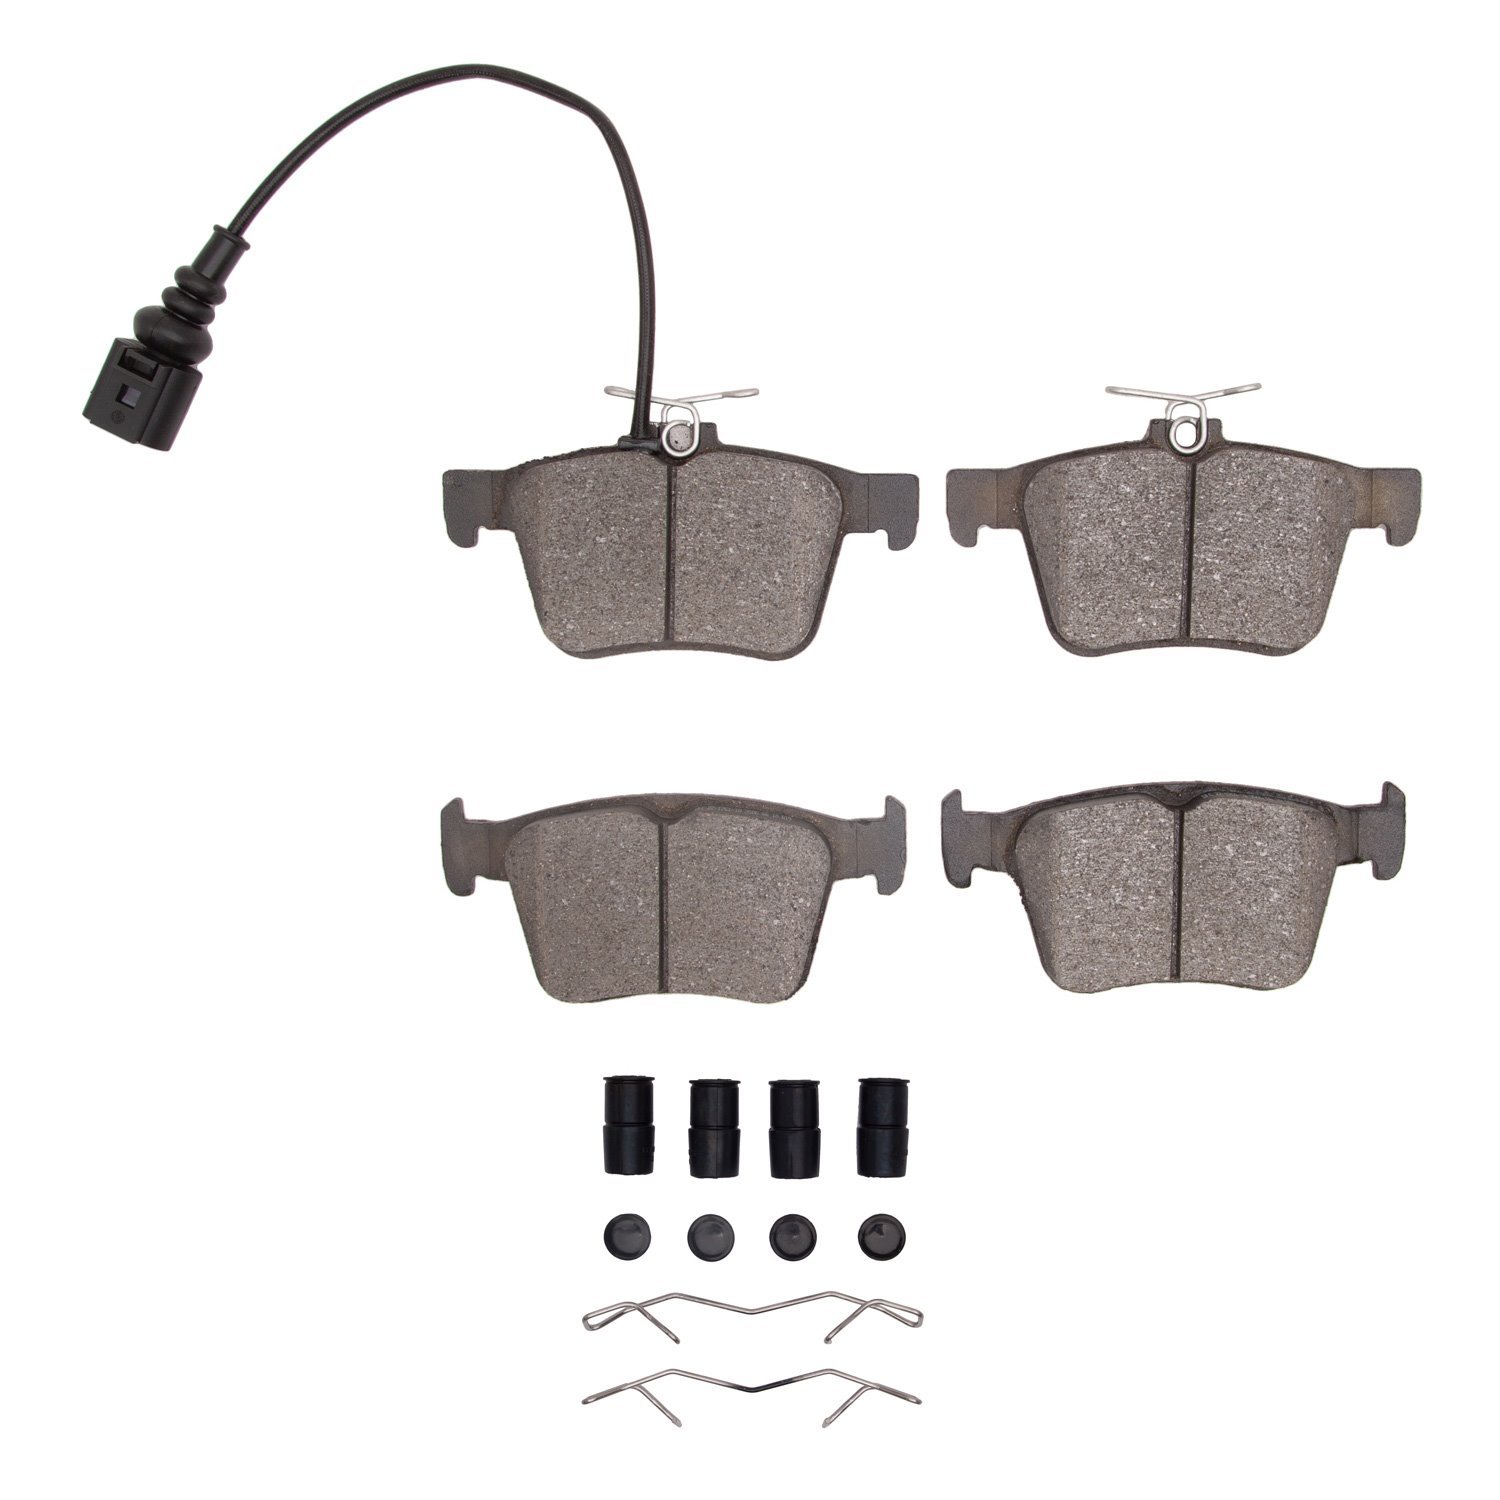 1600-1761-01 5000 Euro Ceramic Brake Pads & Hardware Kit, Fits Select Multiple Makes/Models, Position: Rear